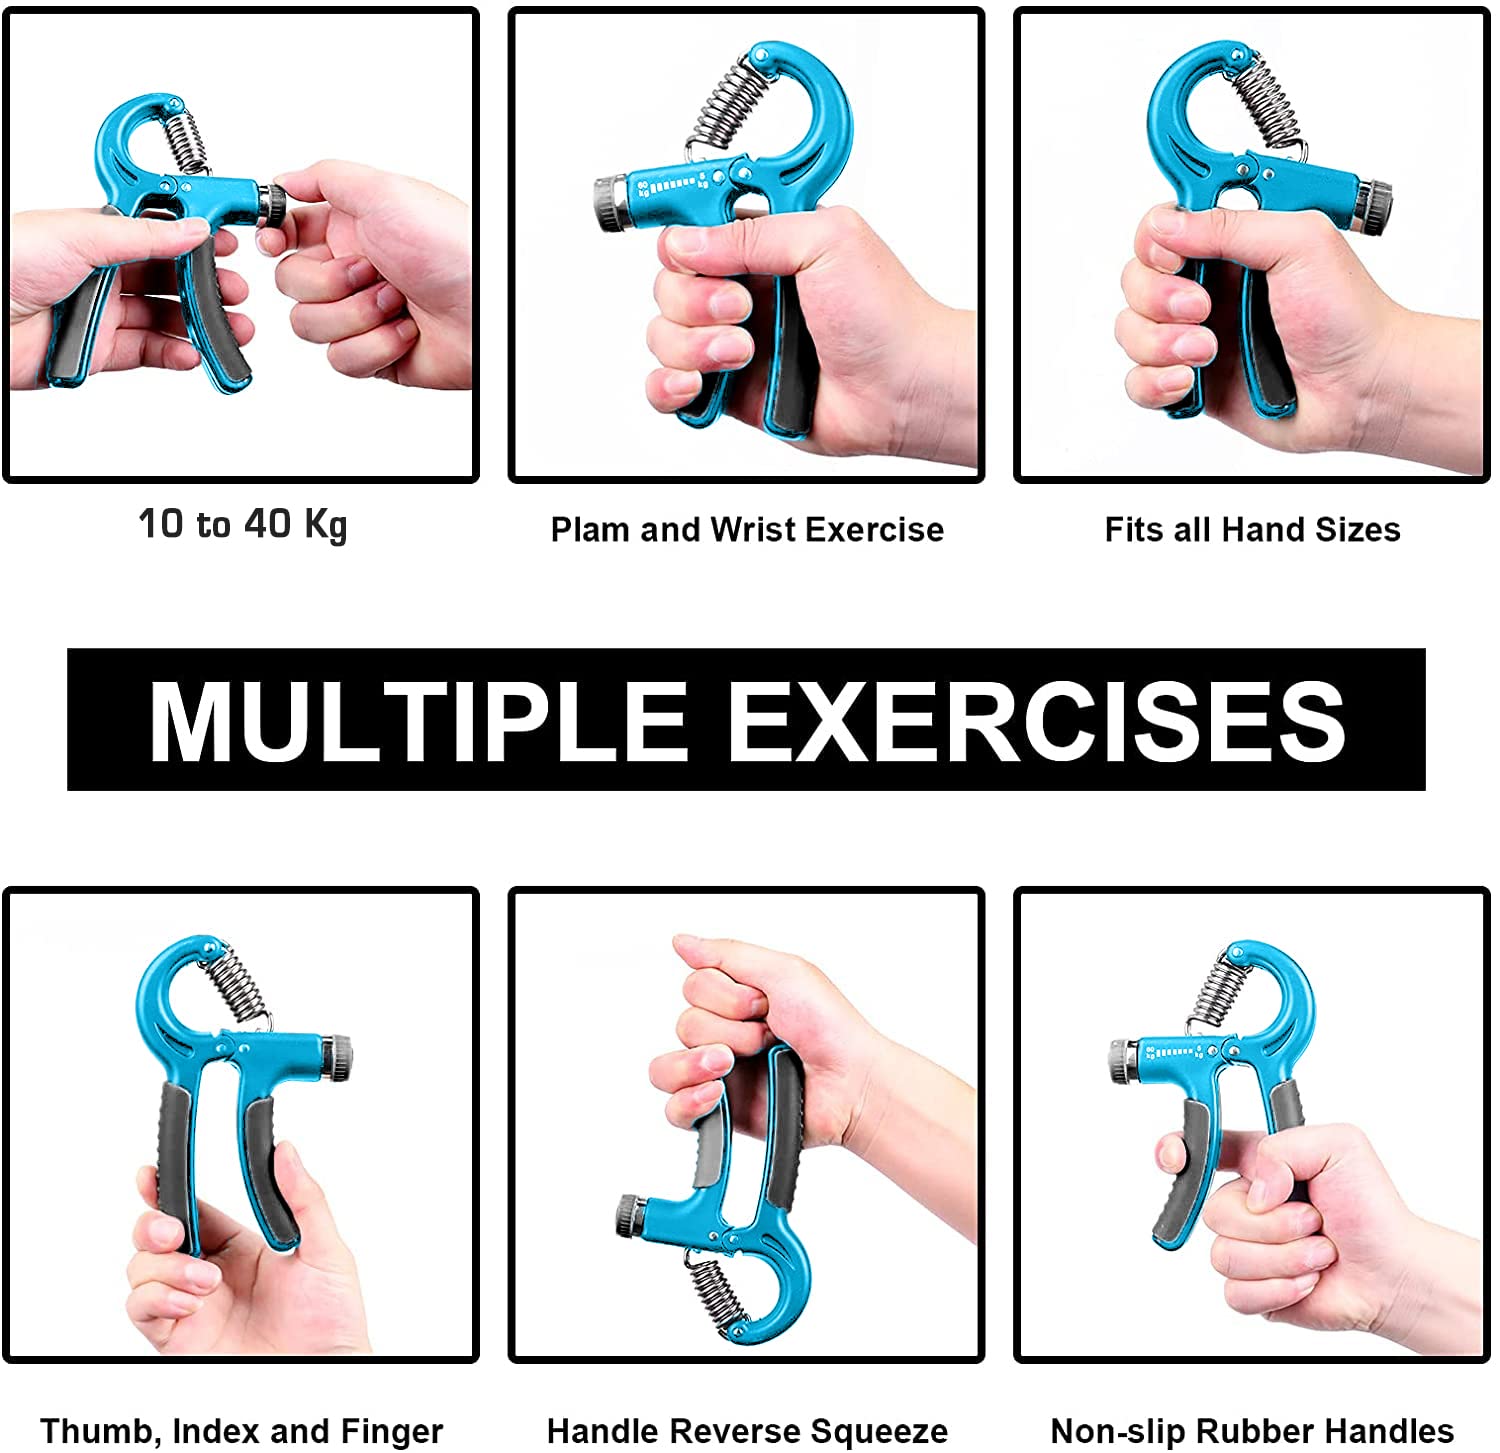 Strauss Adjustable Hand Grip| Adjustable Resistance (10KG - 40KG) | Hand/Power Gripper for Home & Gym Workouts | Perfect for Finger & Forearm Hand Exercises & Strength Building for Men & Women (Black/Blue)